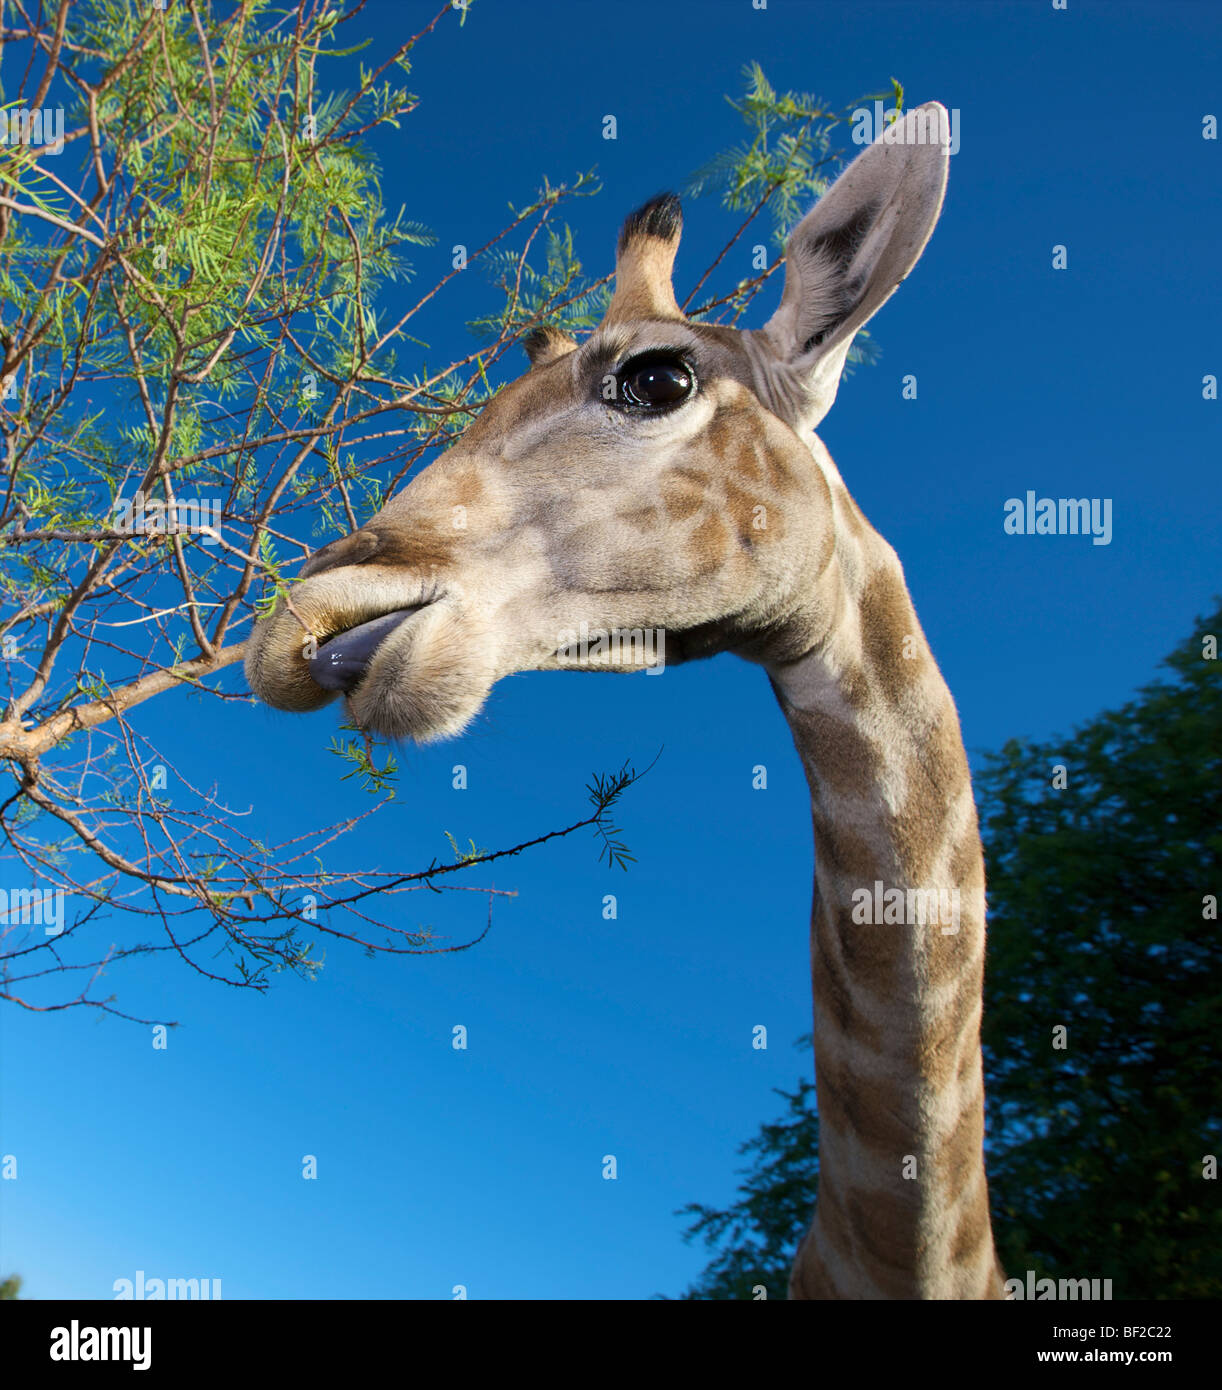 Portrait de Girafe (Giraffa camelopardalis) manger de arbre, la Namibie. Banque D'Images